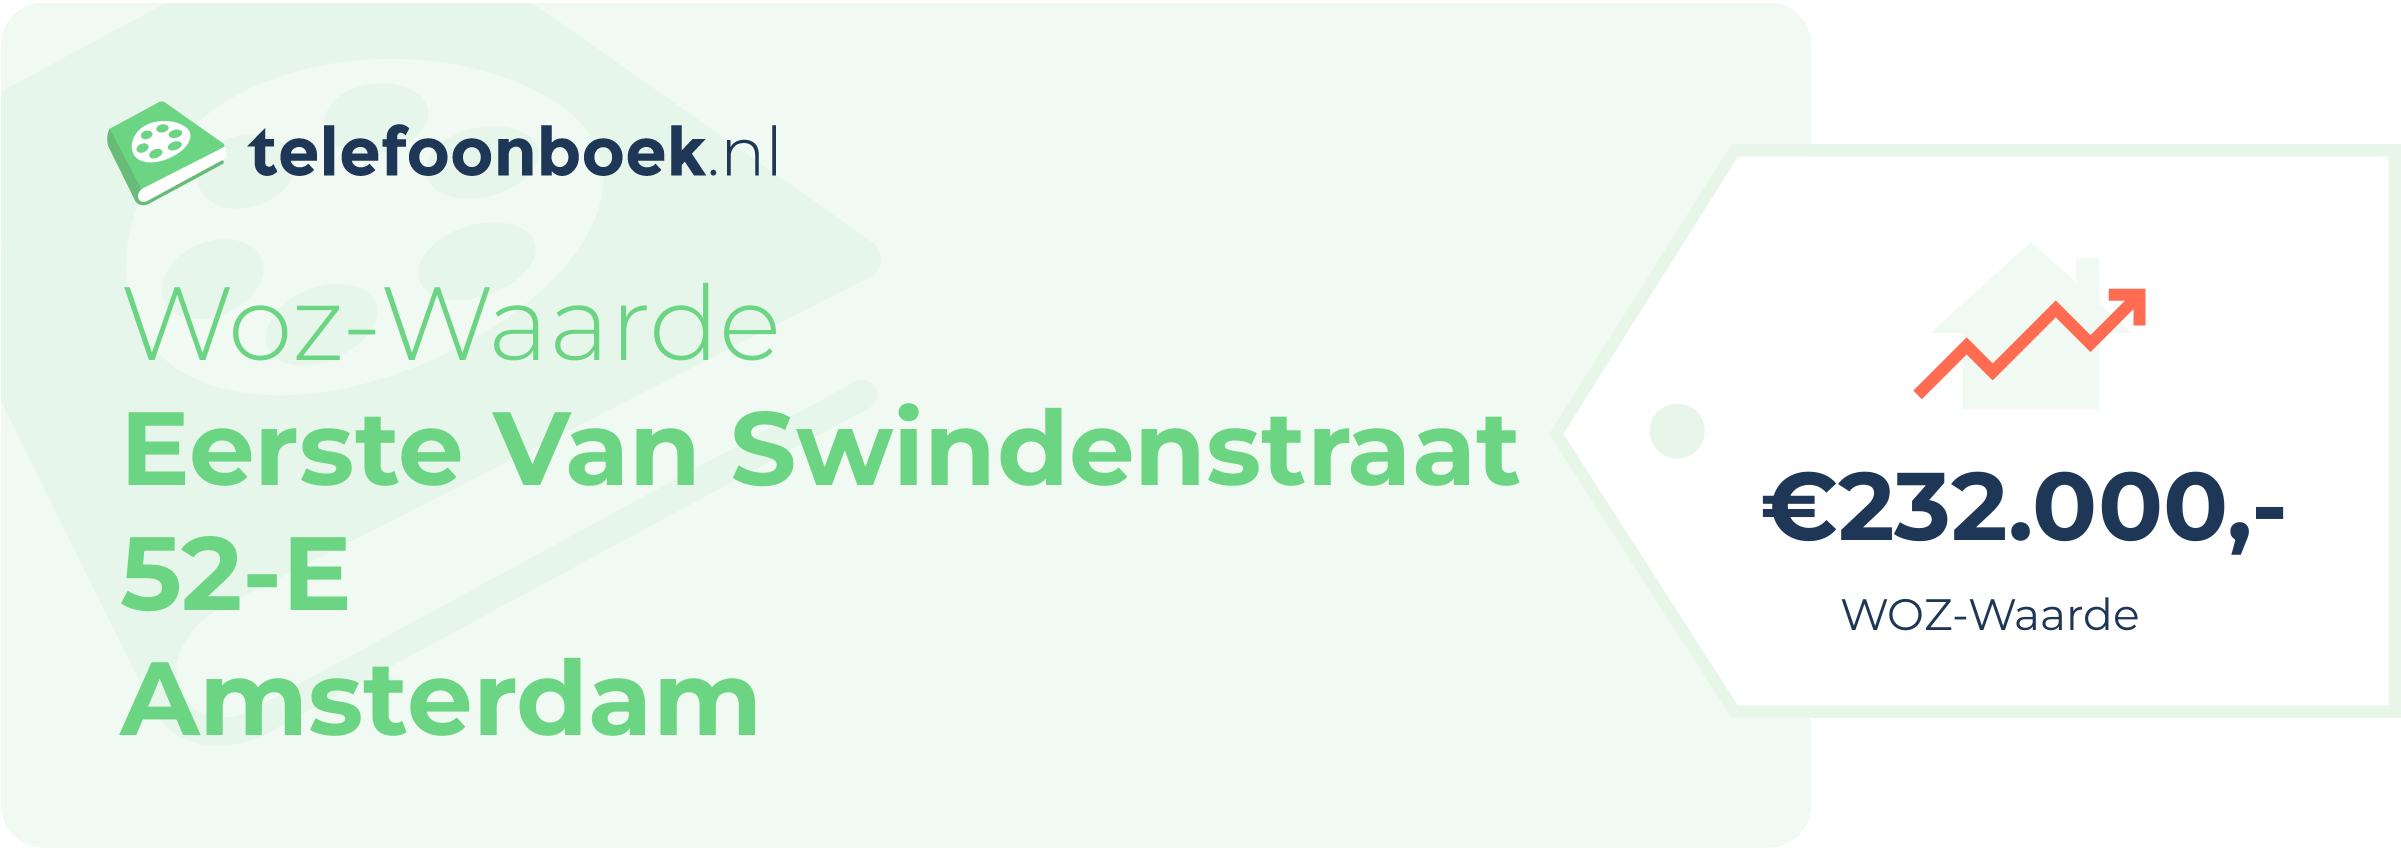 WOZ-waarde Eerste Van Swindenstraat 52-E Amsterdam